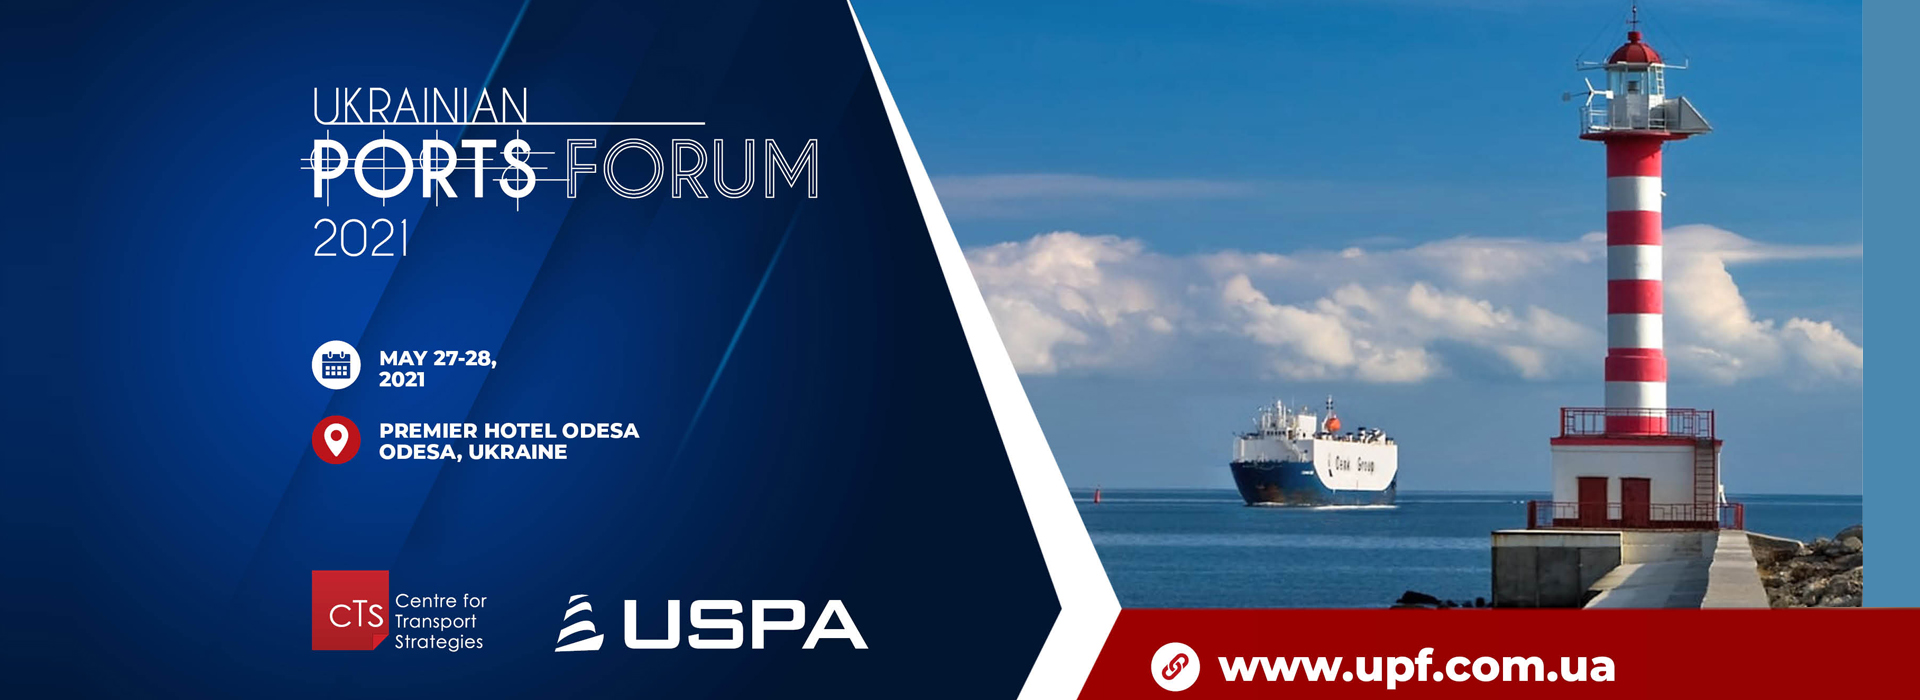 The 3rd Ukrainian Ports Forum